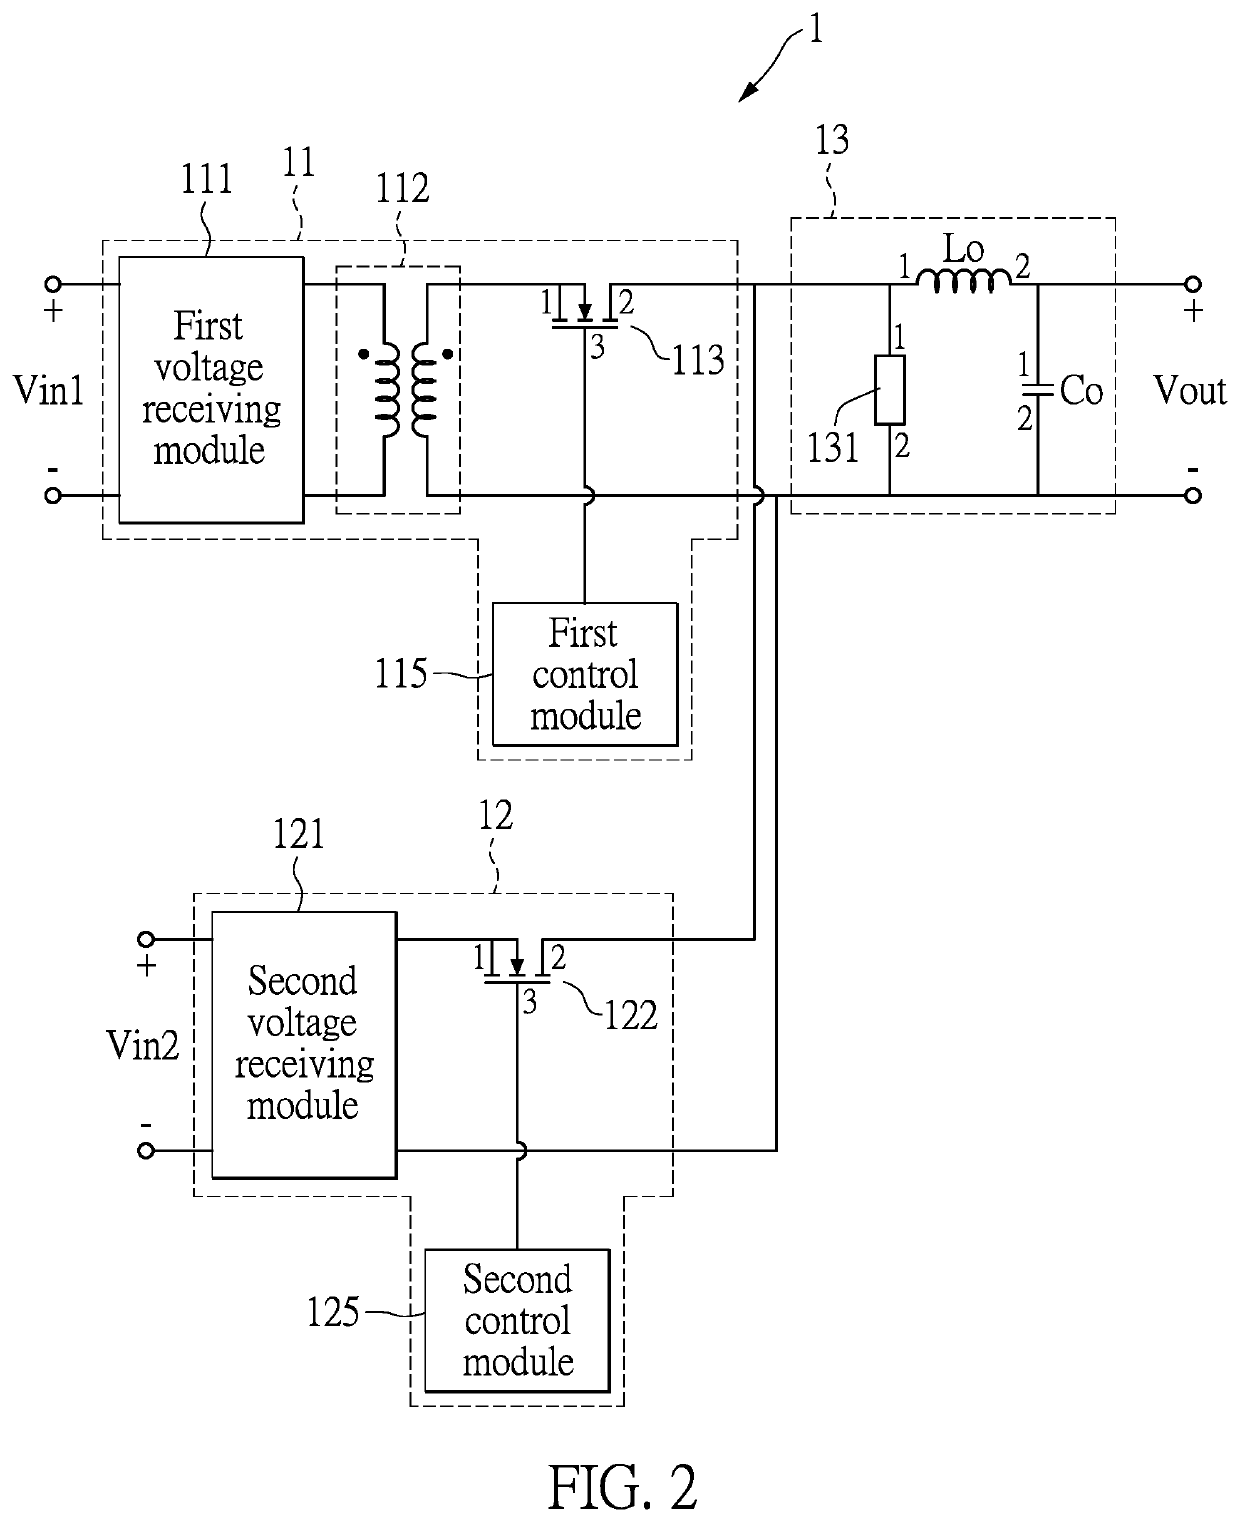 Multi-input voltage converter